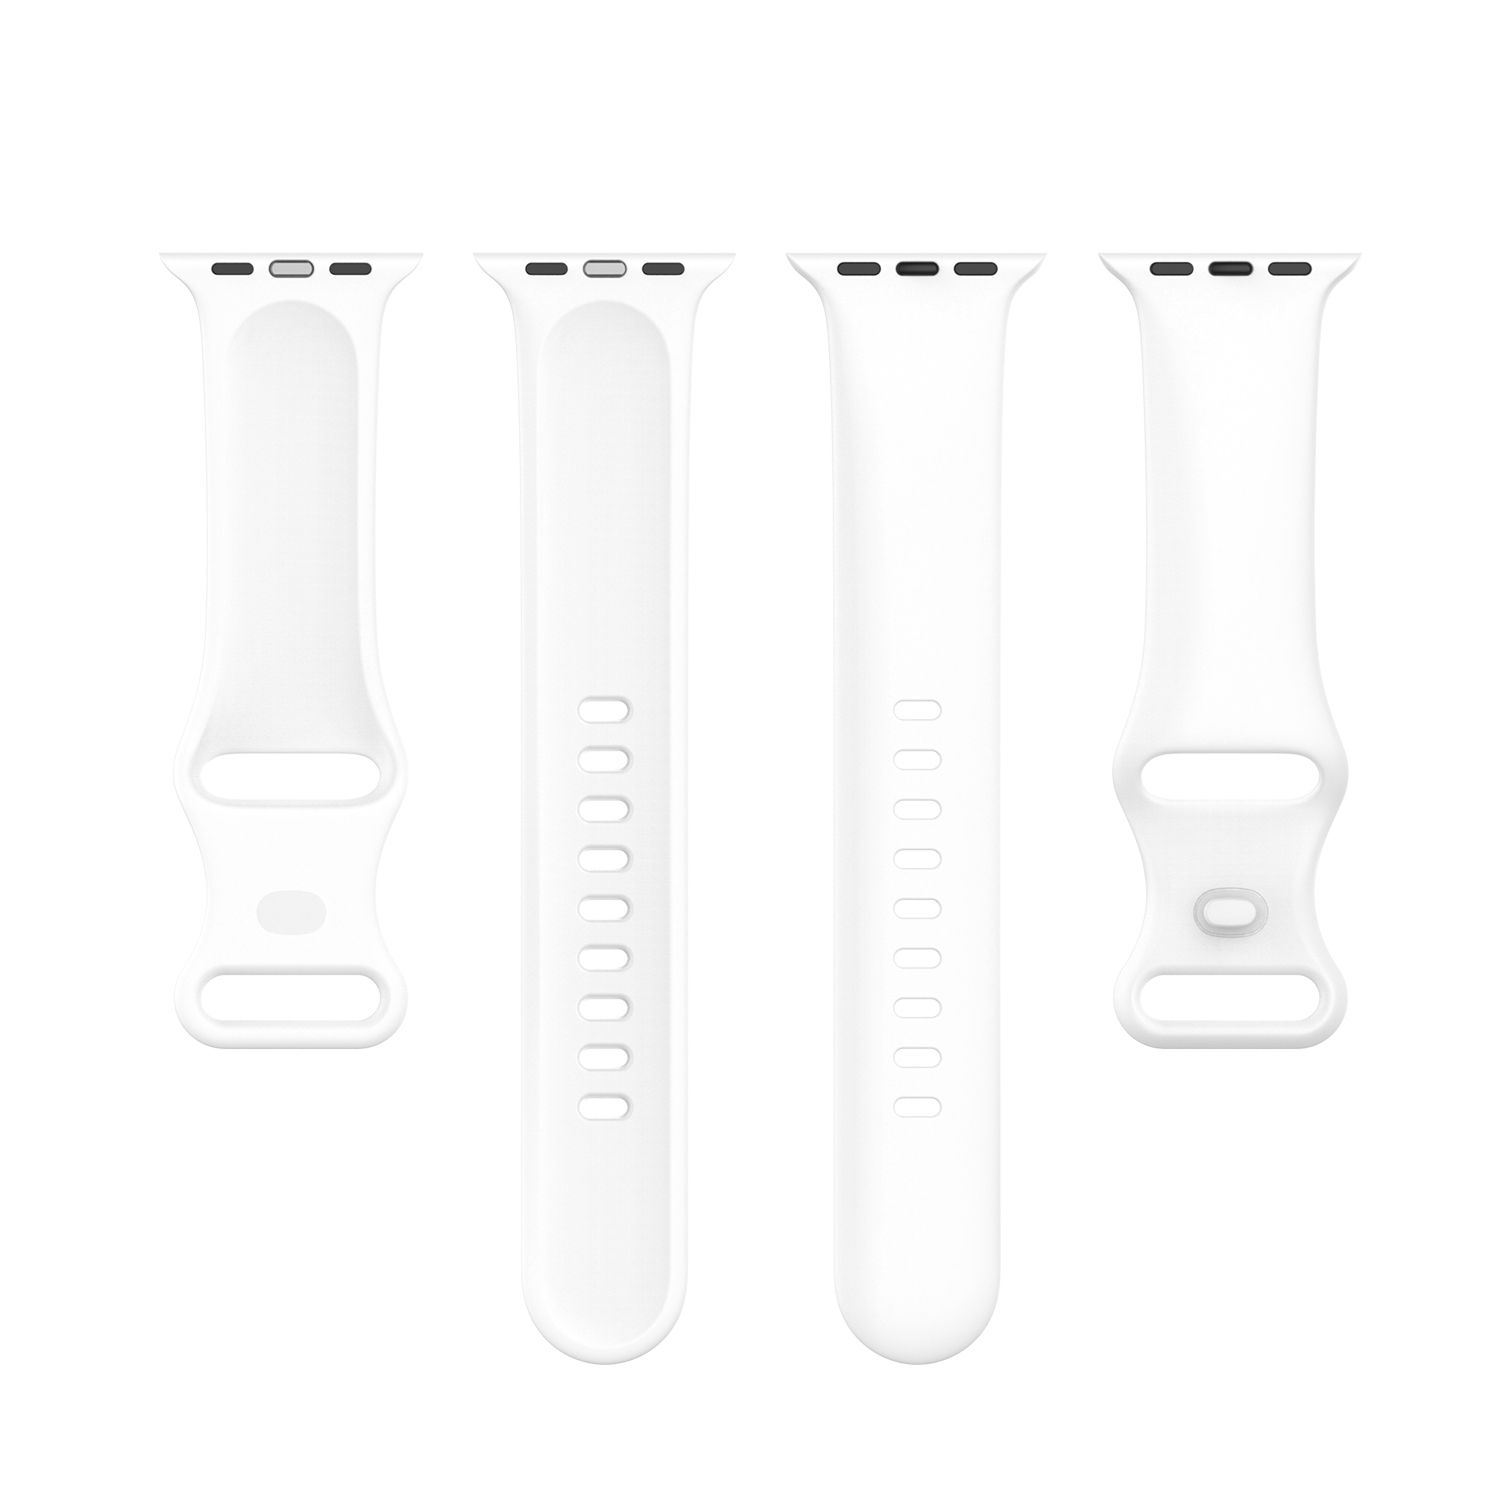 DESIGN Weiß Apple, KÖNIG Sportarmband, 44-42mm, 1/2/3/4/5/6/SE Sportarmband, Watch Series